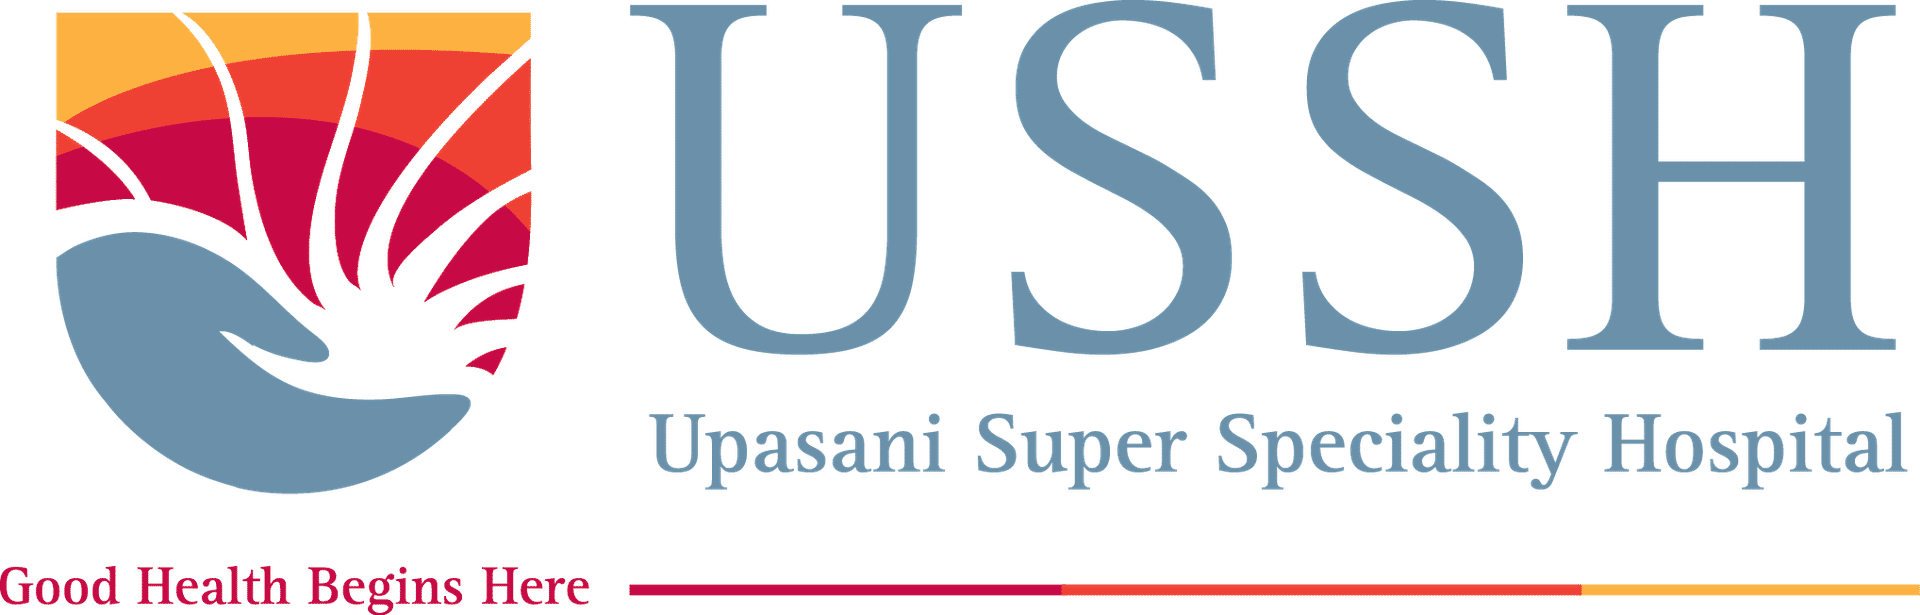 Ussh's logo